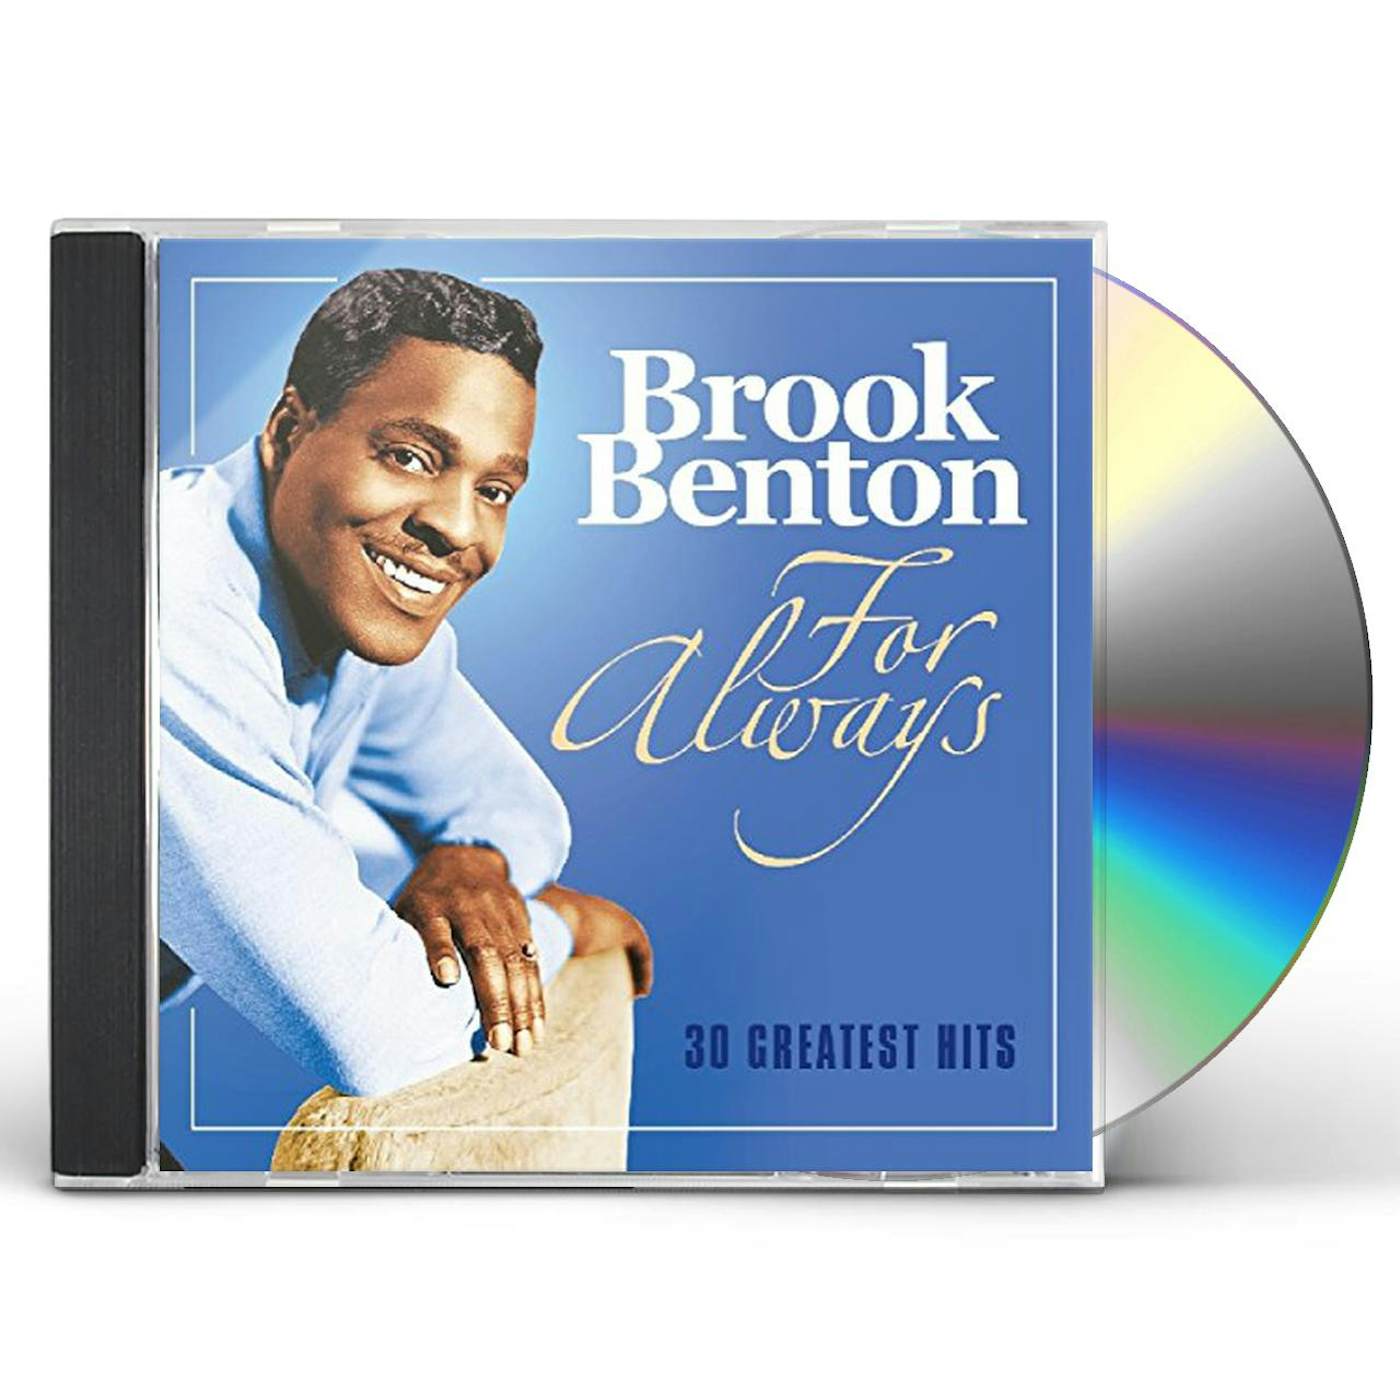 Brook Benton FOR ALWAYS: 30 GREATEST HITS CD